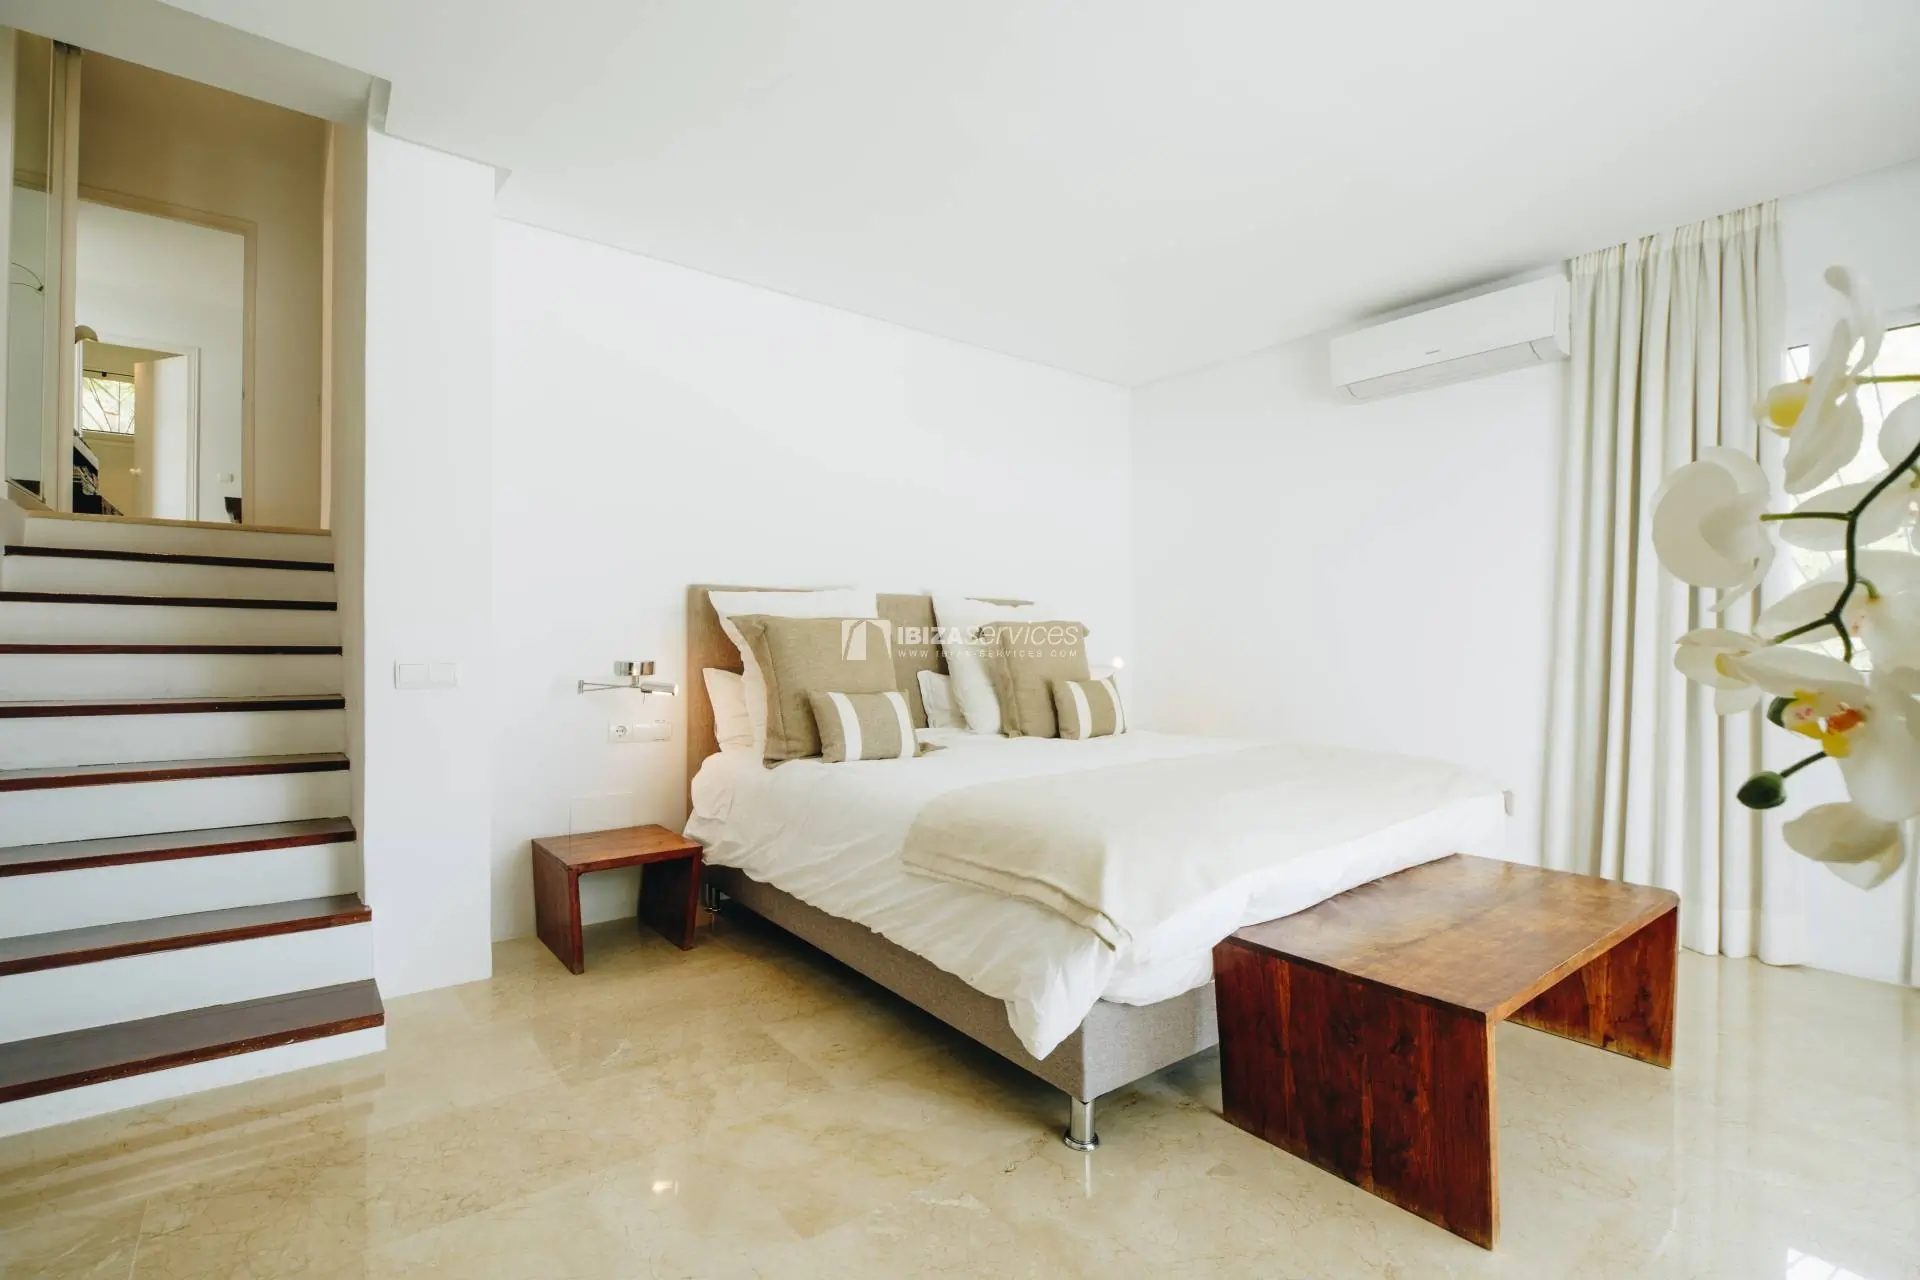 Cala Jondal moderna casa de 4 dormitorios en alquiler para vacaciones en Ibiza